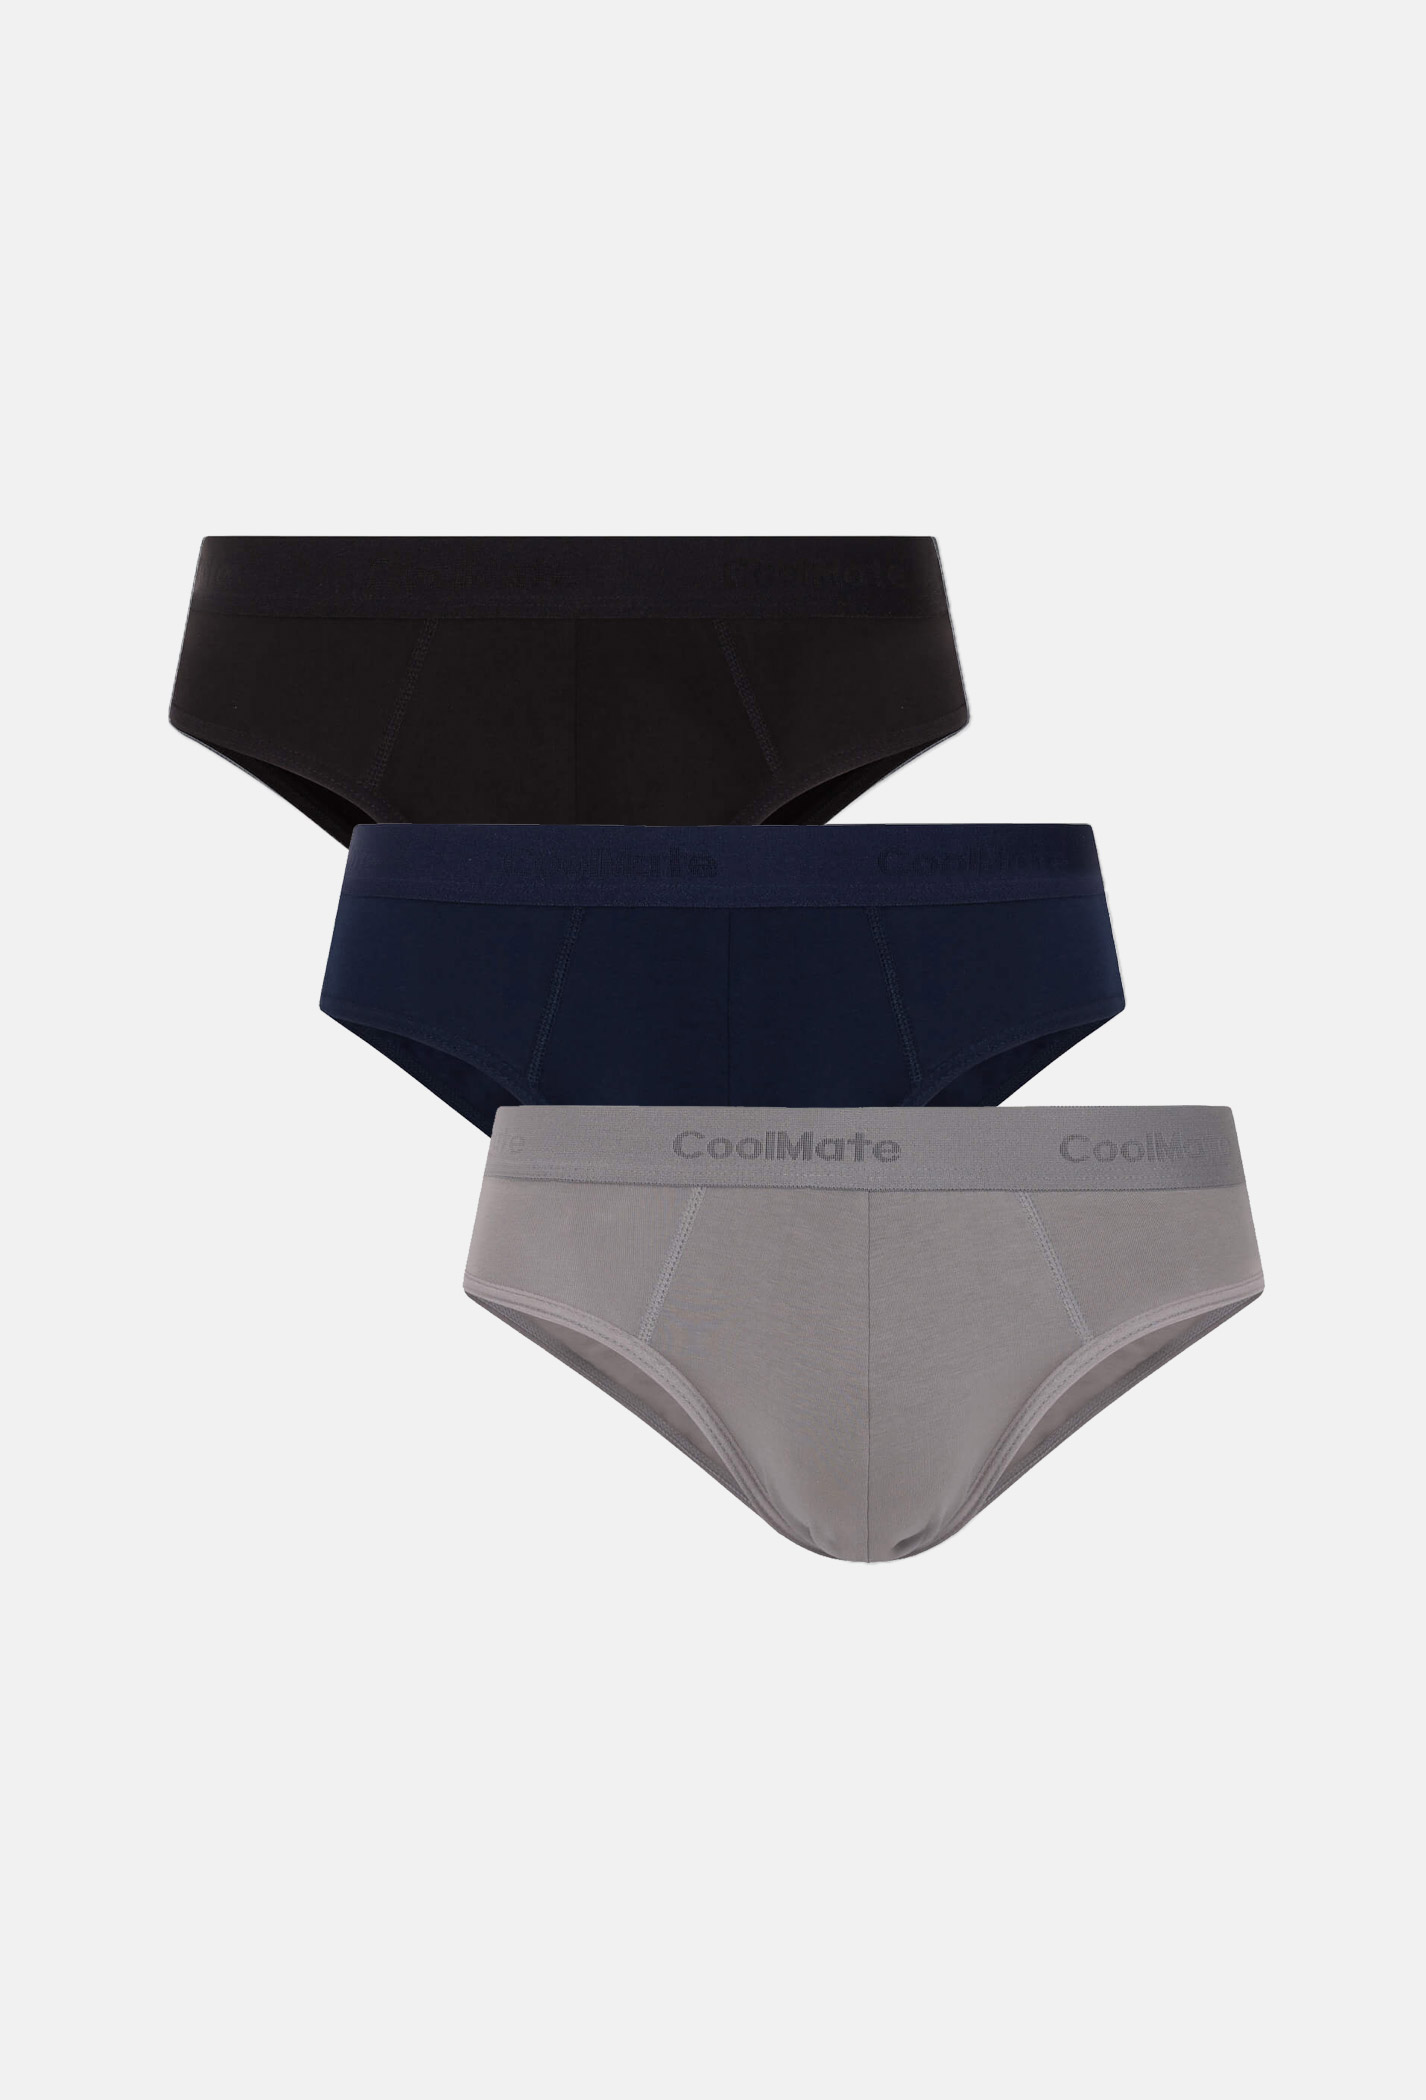 FLASH SALE - 03 quần lót nam Brief Cotton Compact co giãn  Phối màu